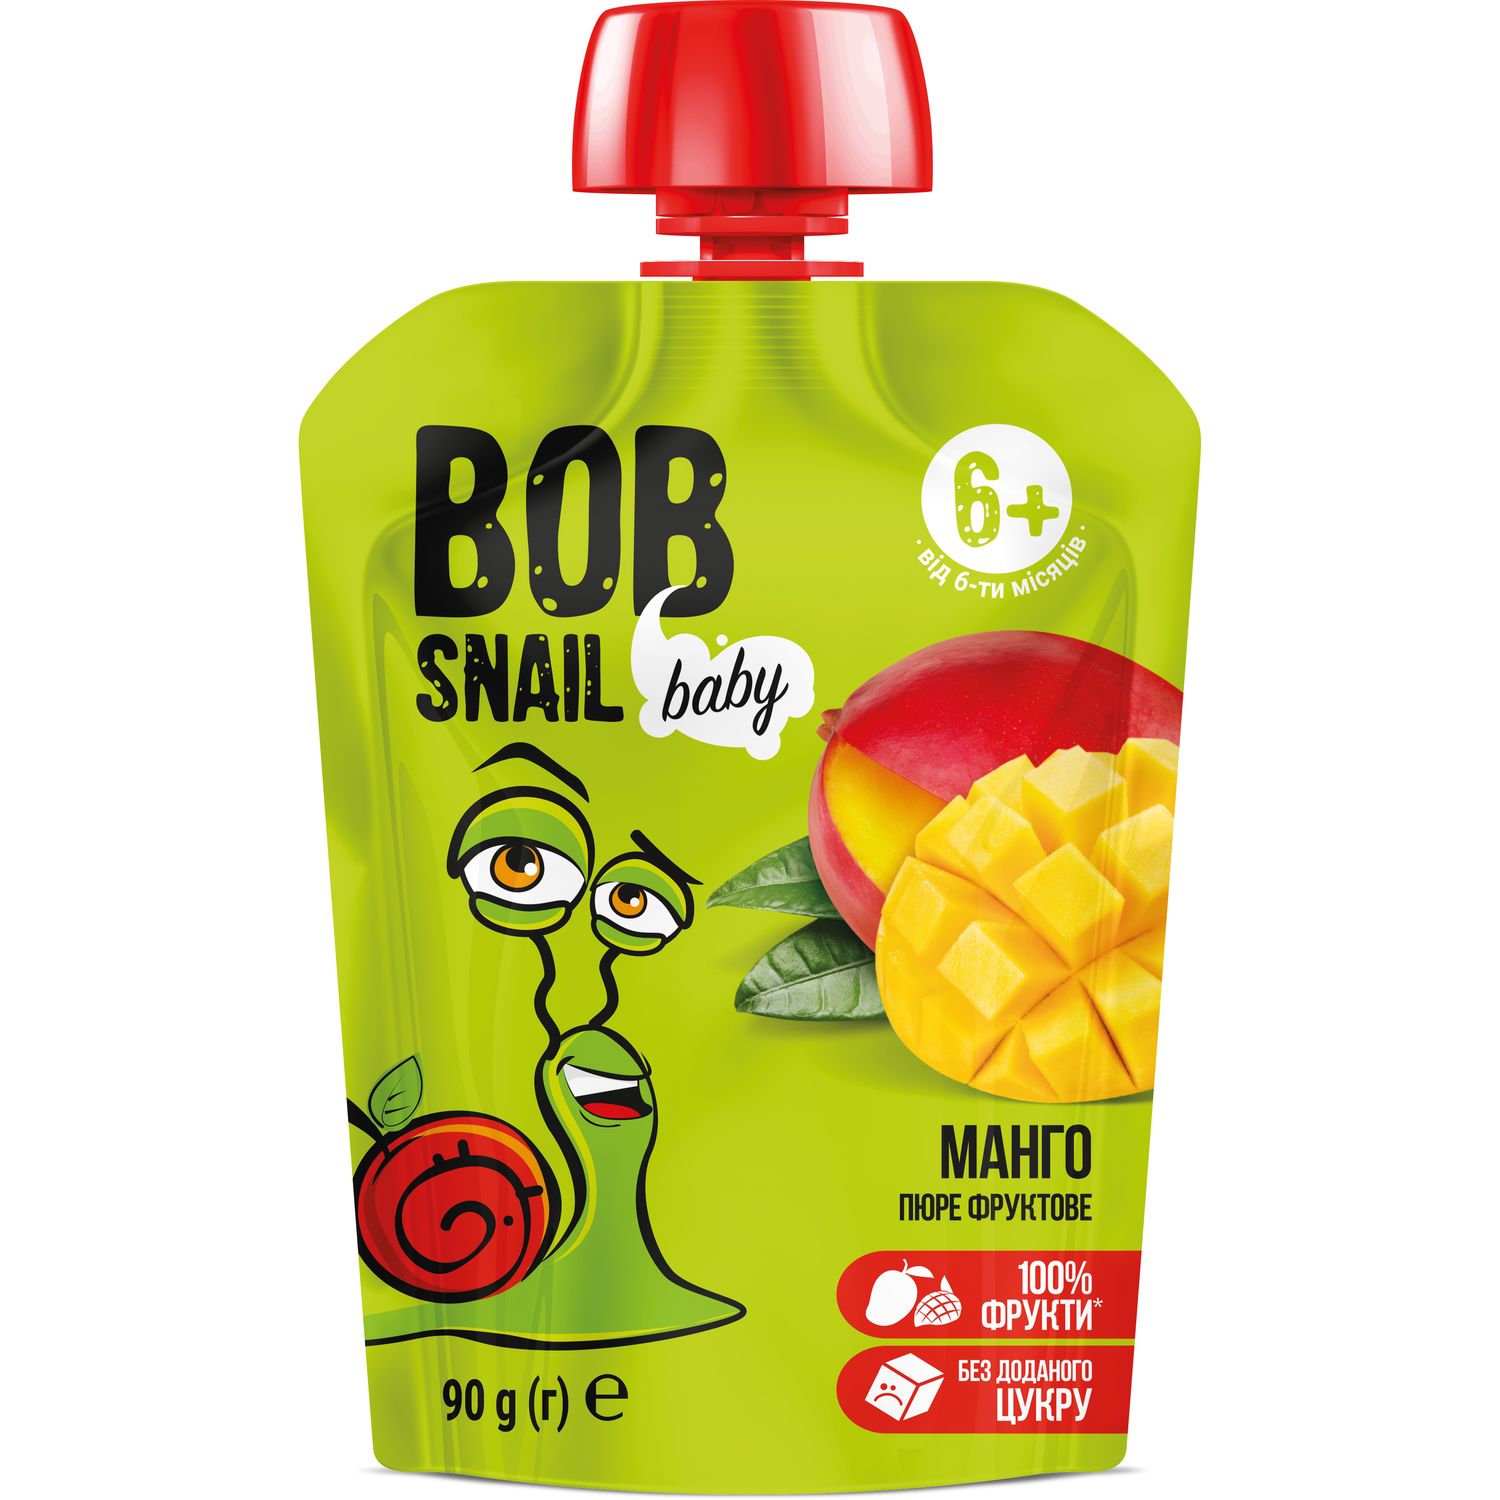 Набор фруктового пюре Bob Snail Манго гомогенизированное 900 г (10 шт. x 90 г) - фото 2